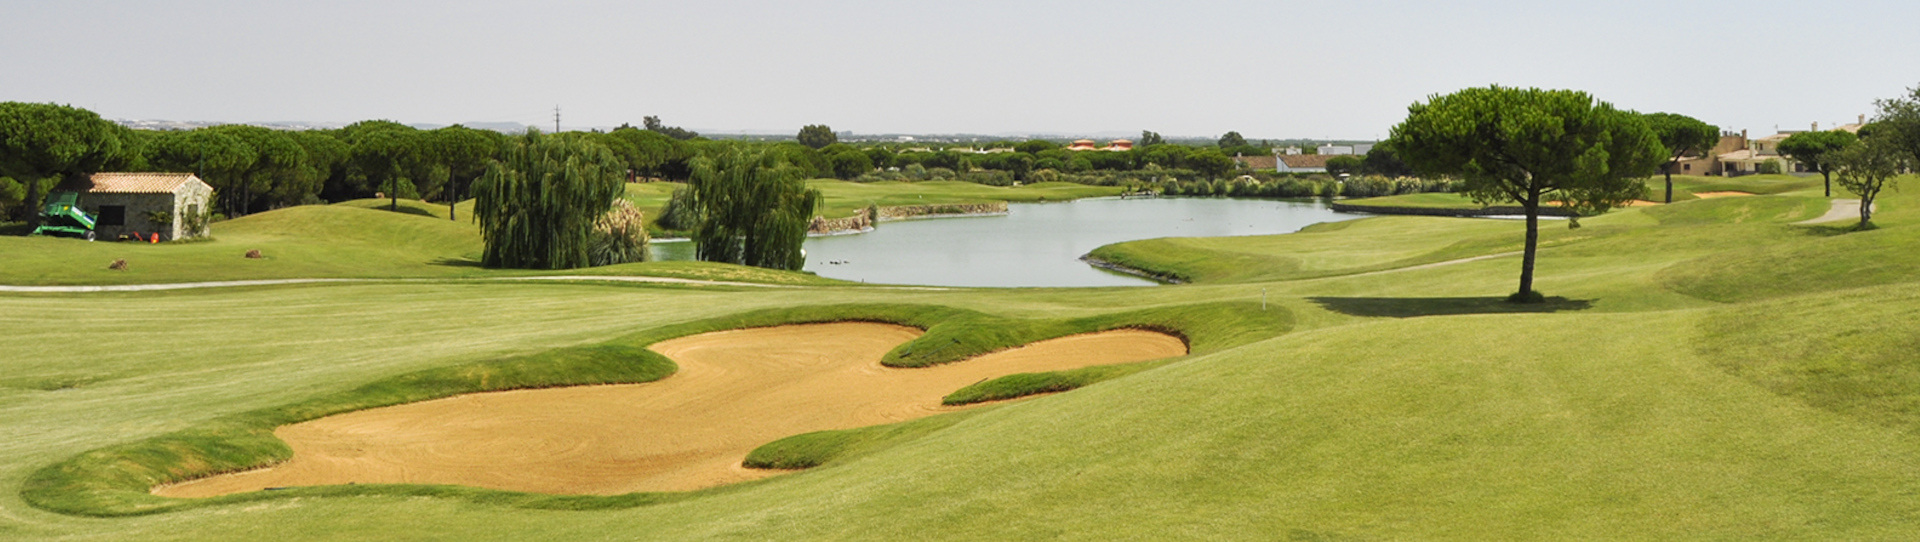 Spain golf courses - Sancti Petri Hills Golf - Photo 3